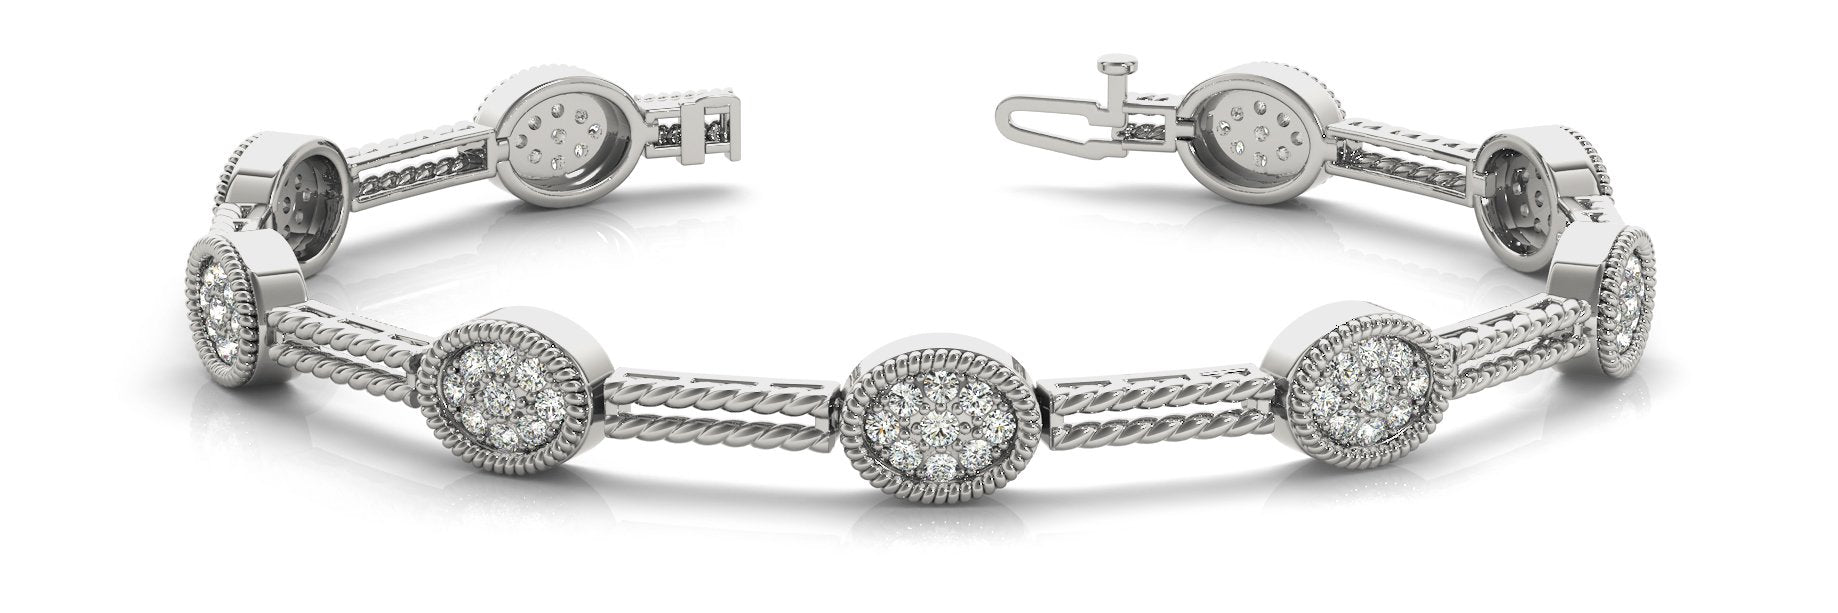 Fancy Diamond Bracelet Ladies 1.91ct tw - 14kt White Gold